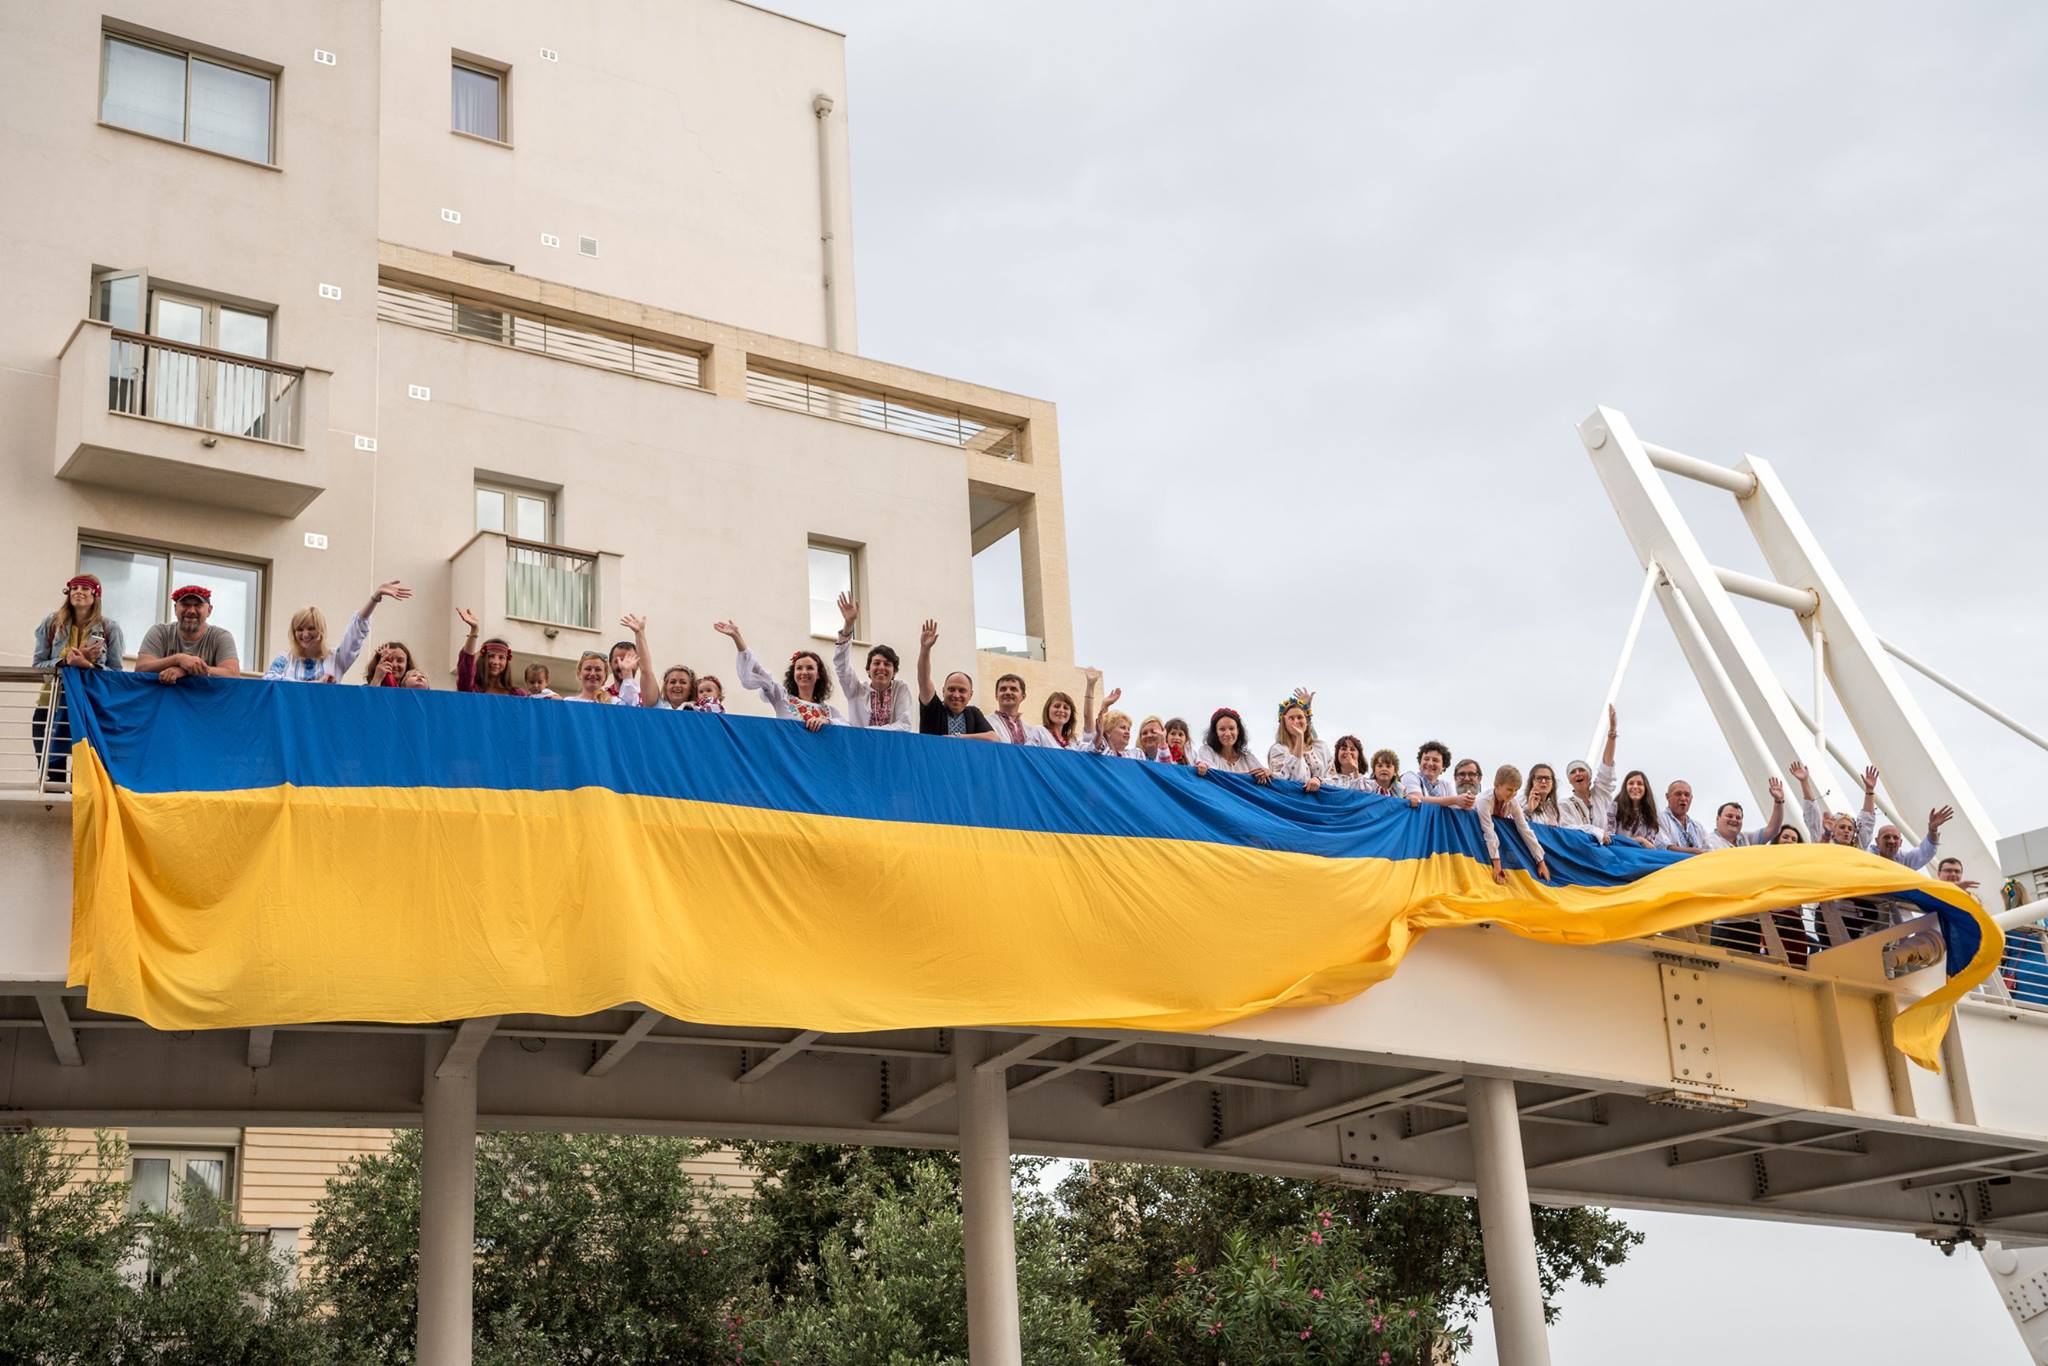 Foundation for the Ukrainian Community of Malta